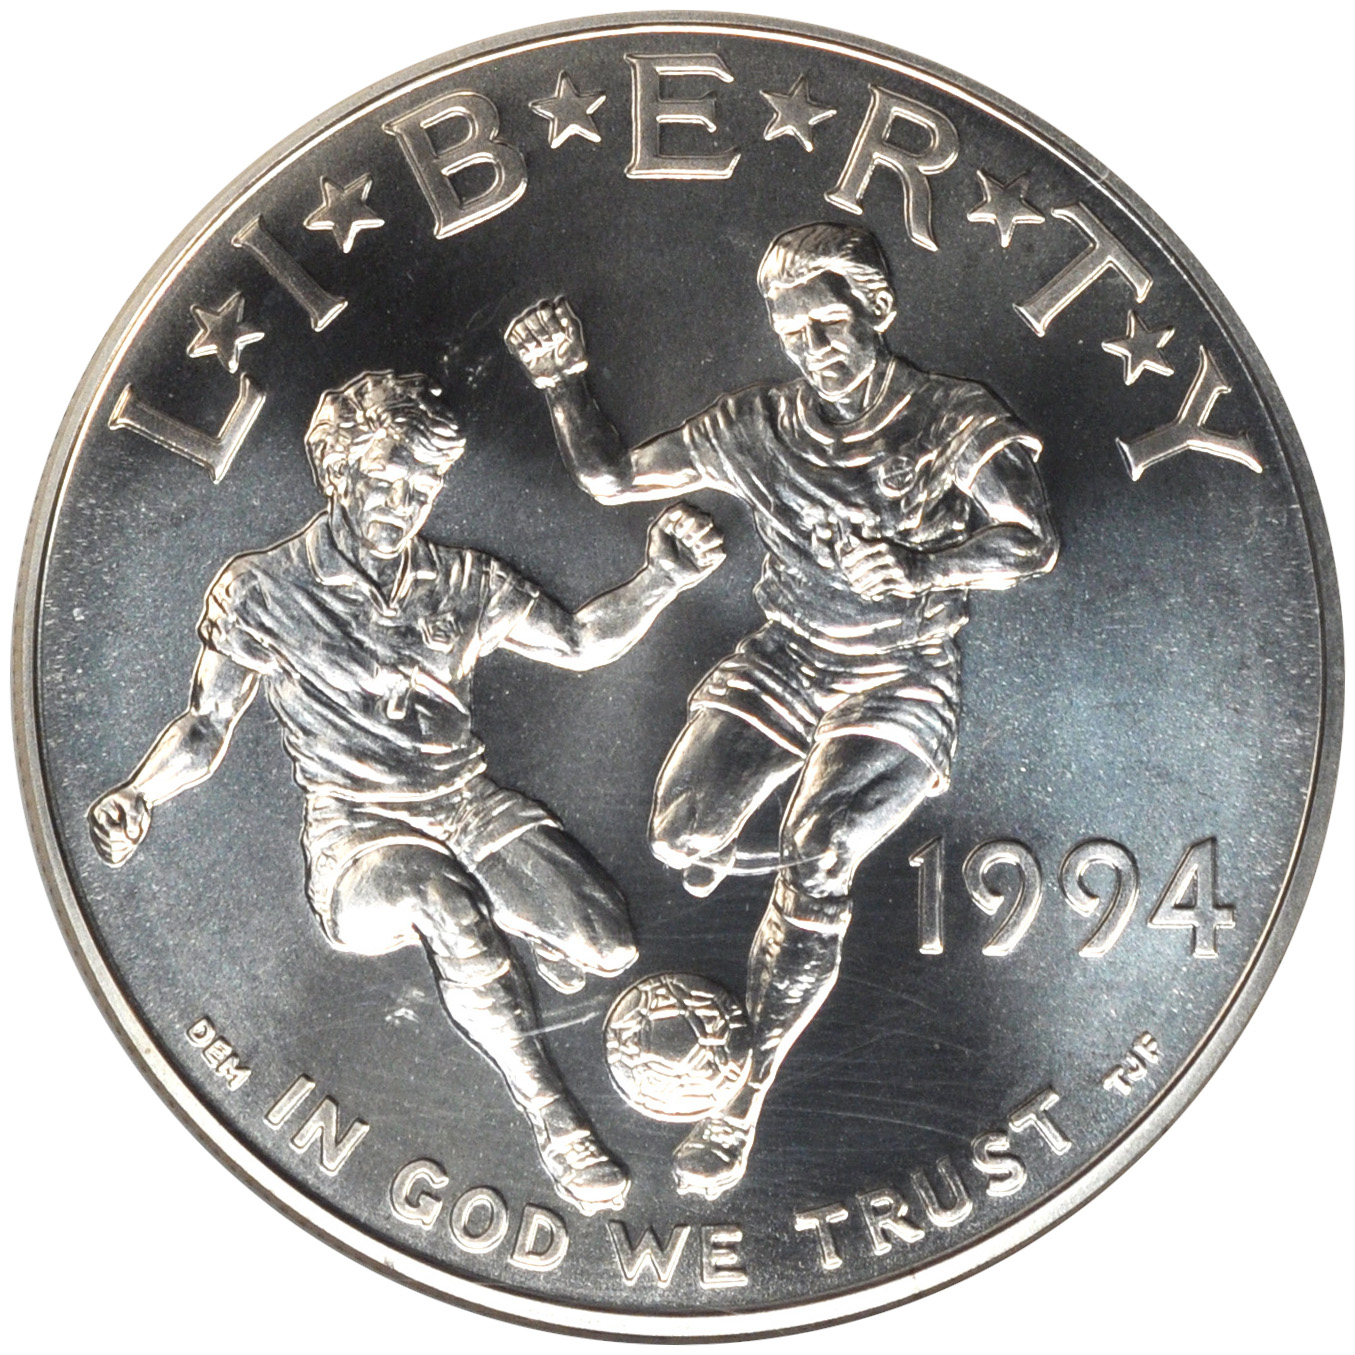 Details about   1994-D World Cup $1 Silver Commem BU w/Box & COA SKU#6998